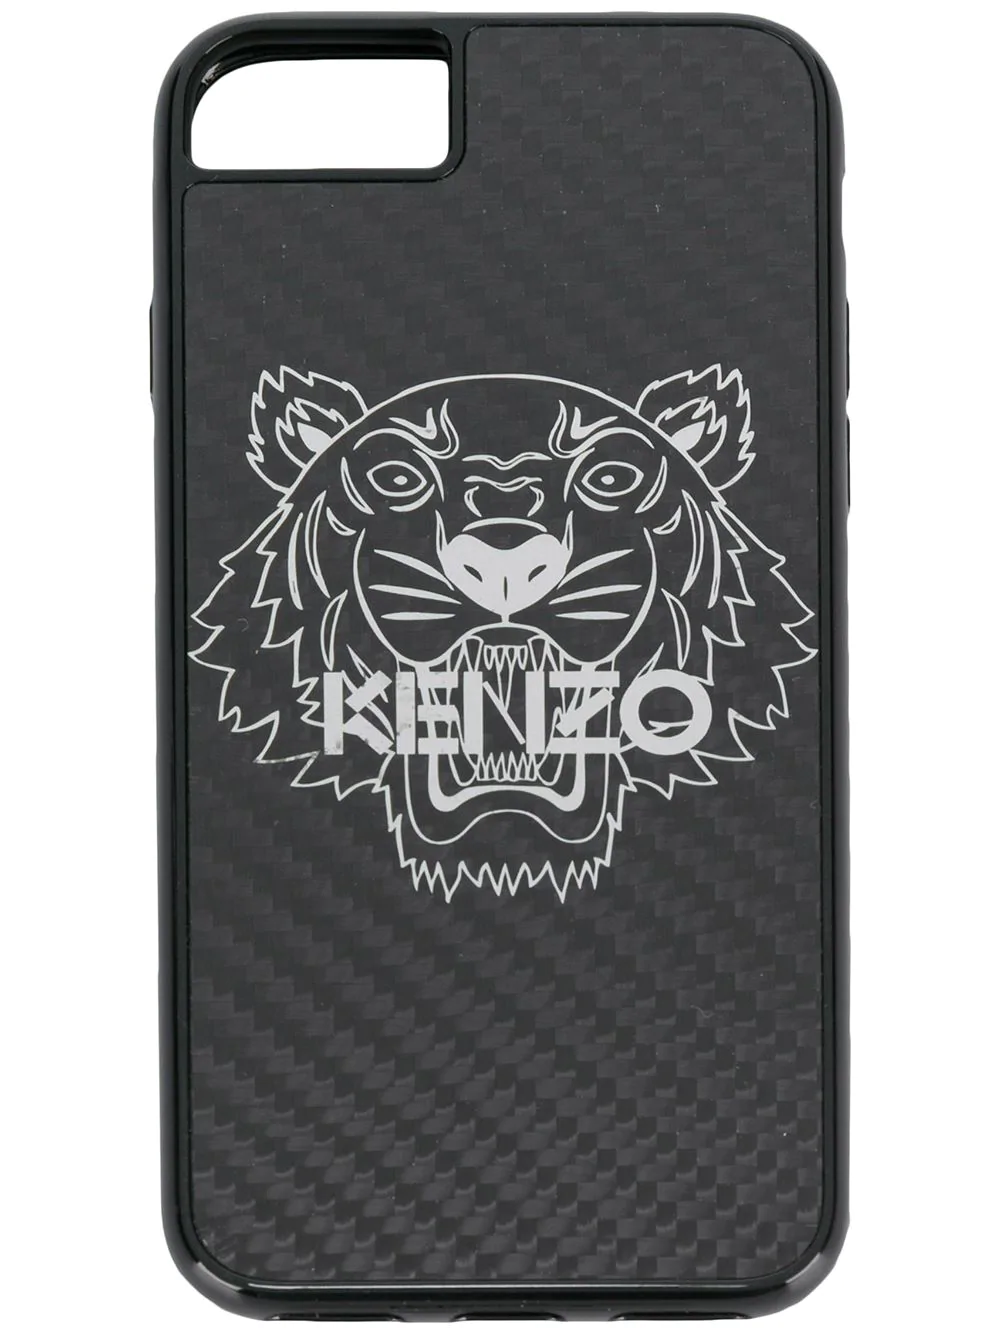 kenzo iphone 7 case sale